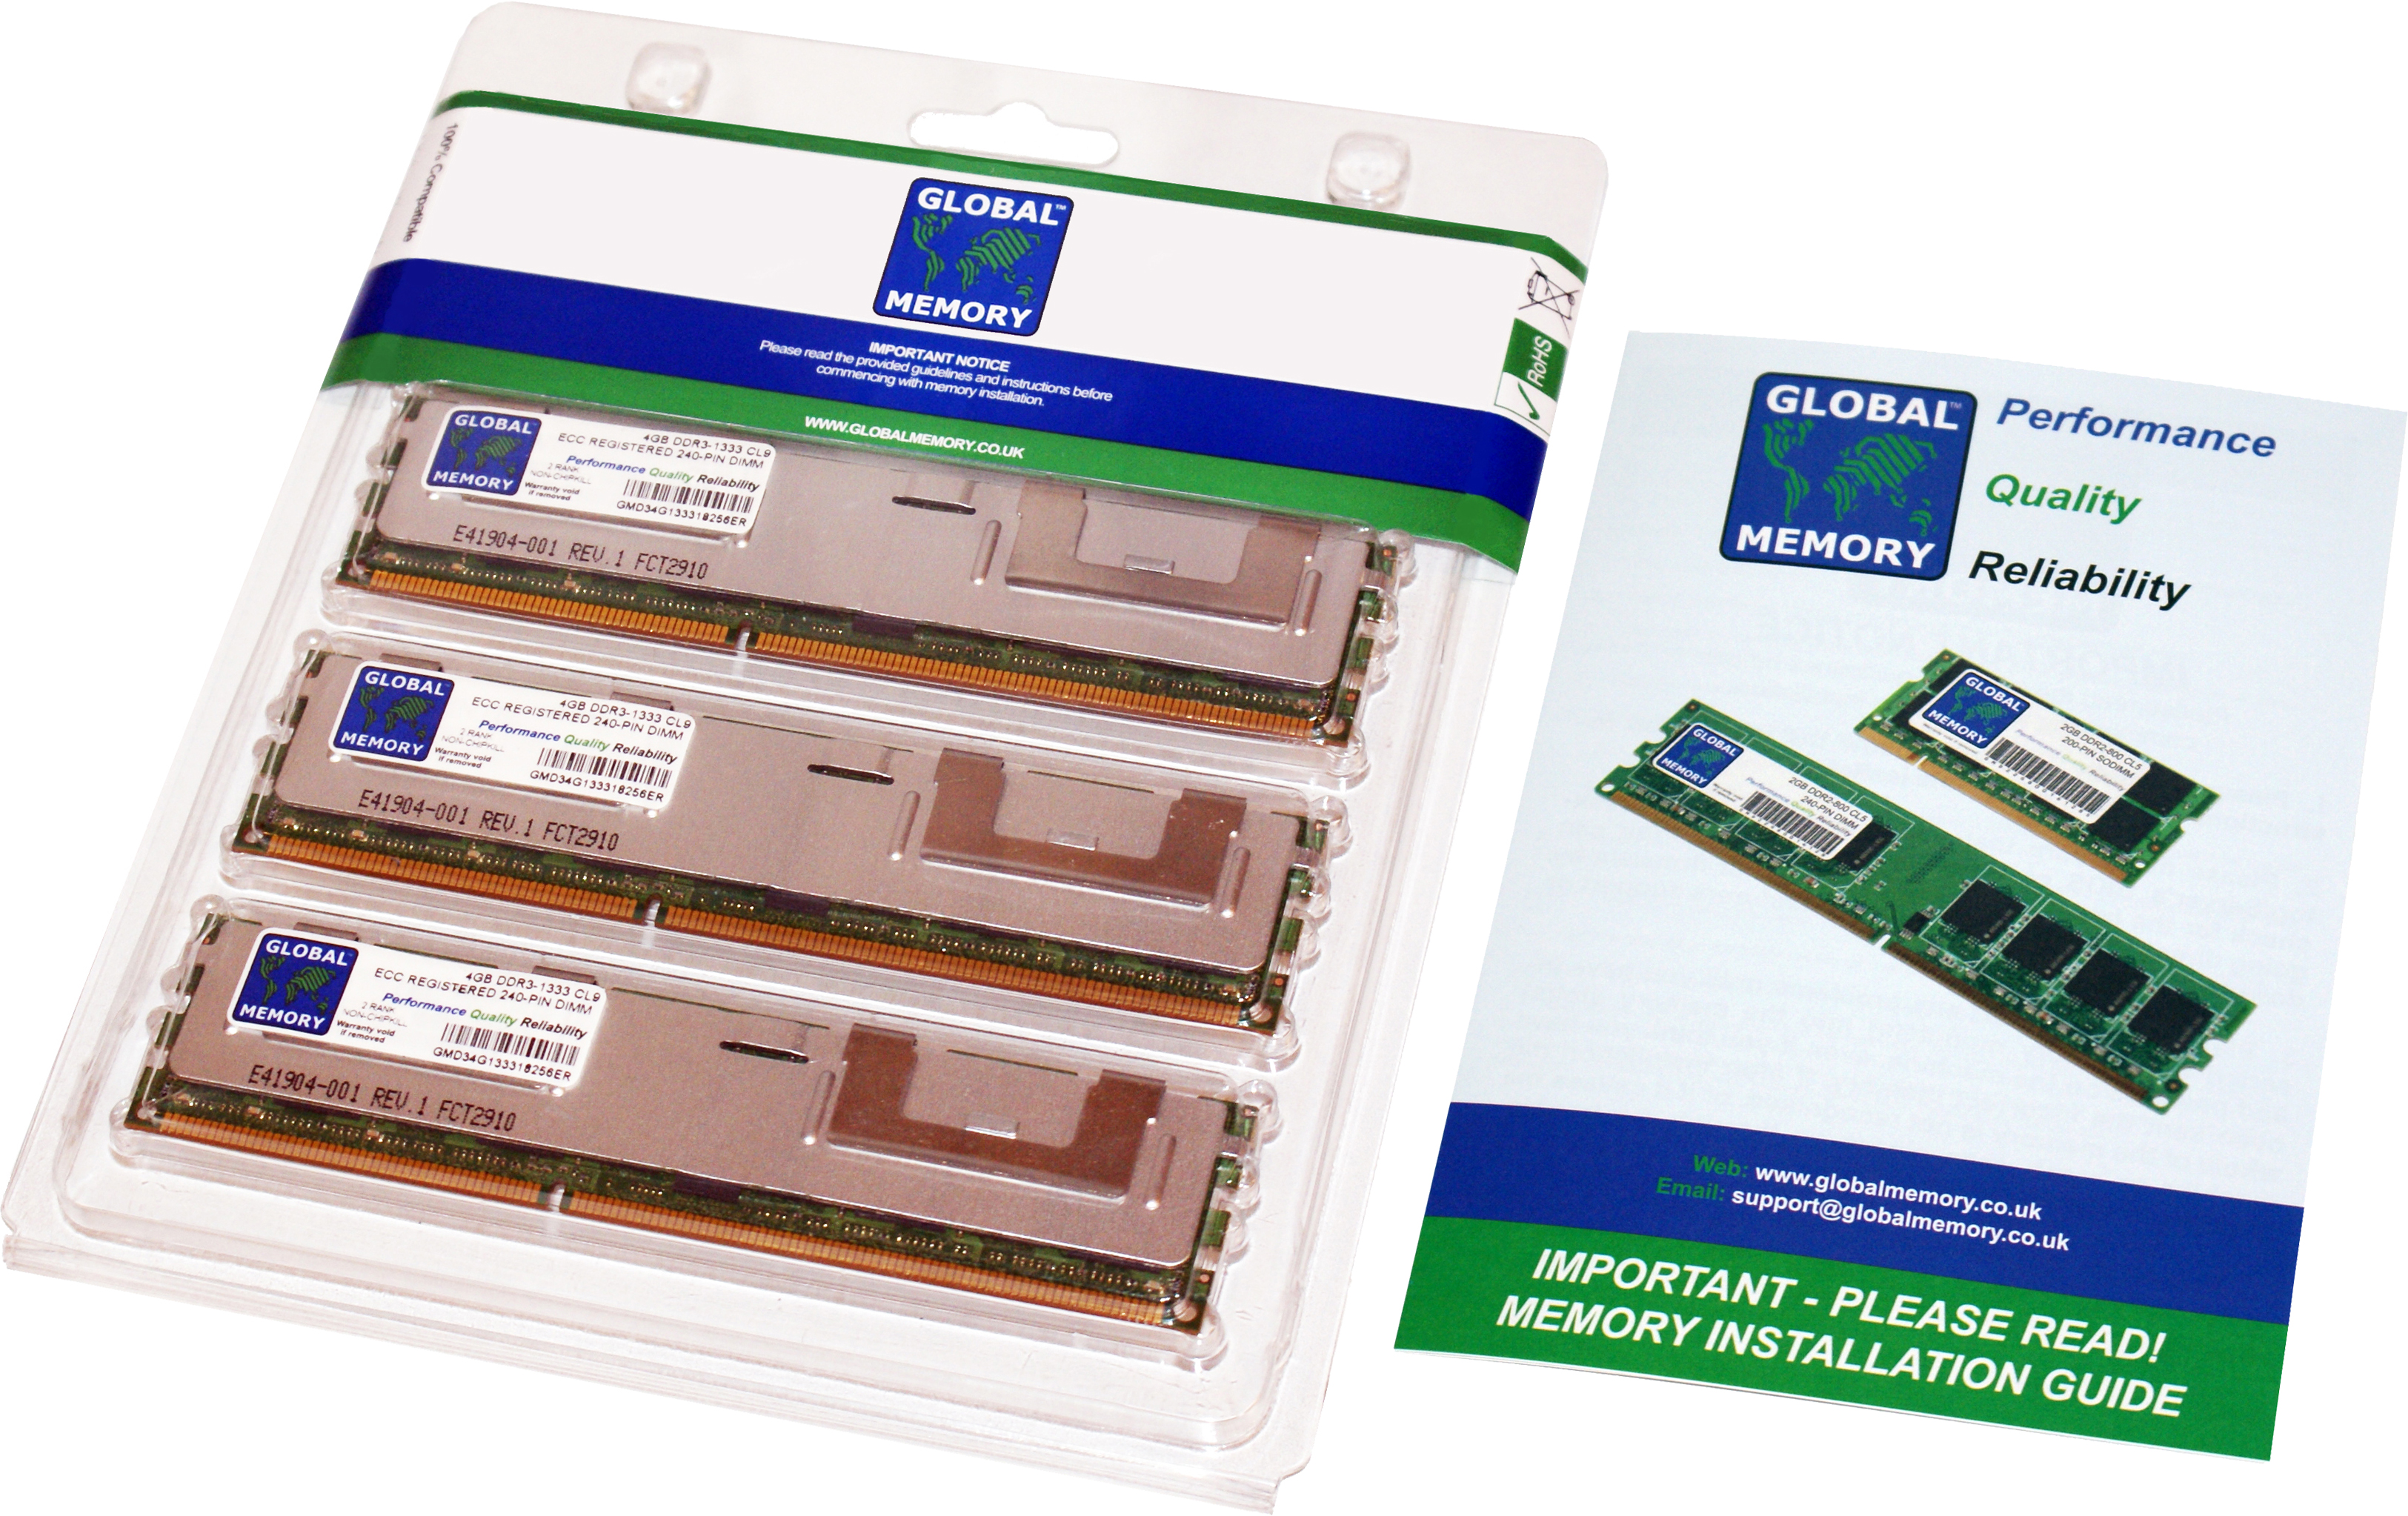 48GB (3 x 16GB) DDR3 1333MHz PC3-10600 240-PIN ECC REGISTERED DIMM (RDIMM) MEMORY RAM KIT FOR IBM/LENOVO SERVERS/WORKSTATIONS (12 RANK KIT NON-CHIPKILL)